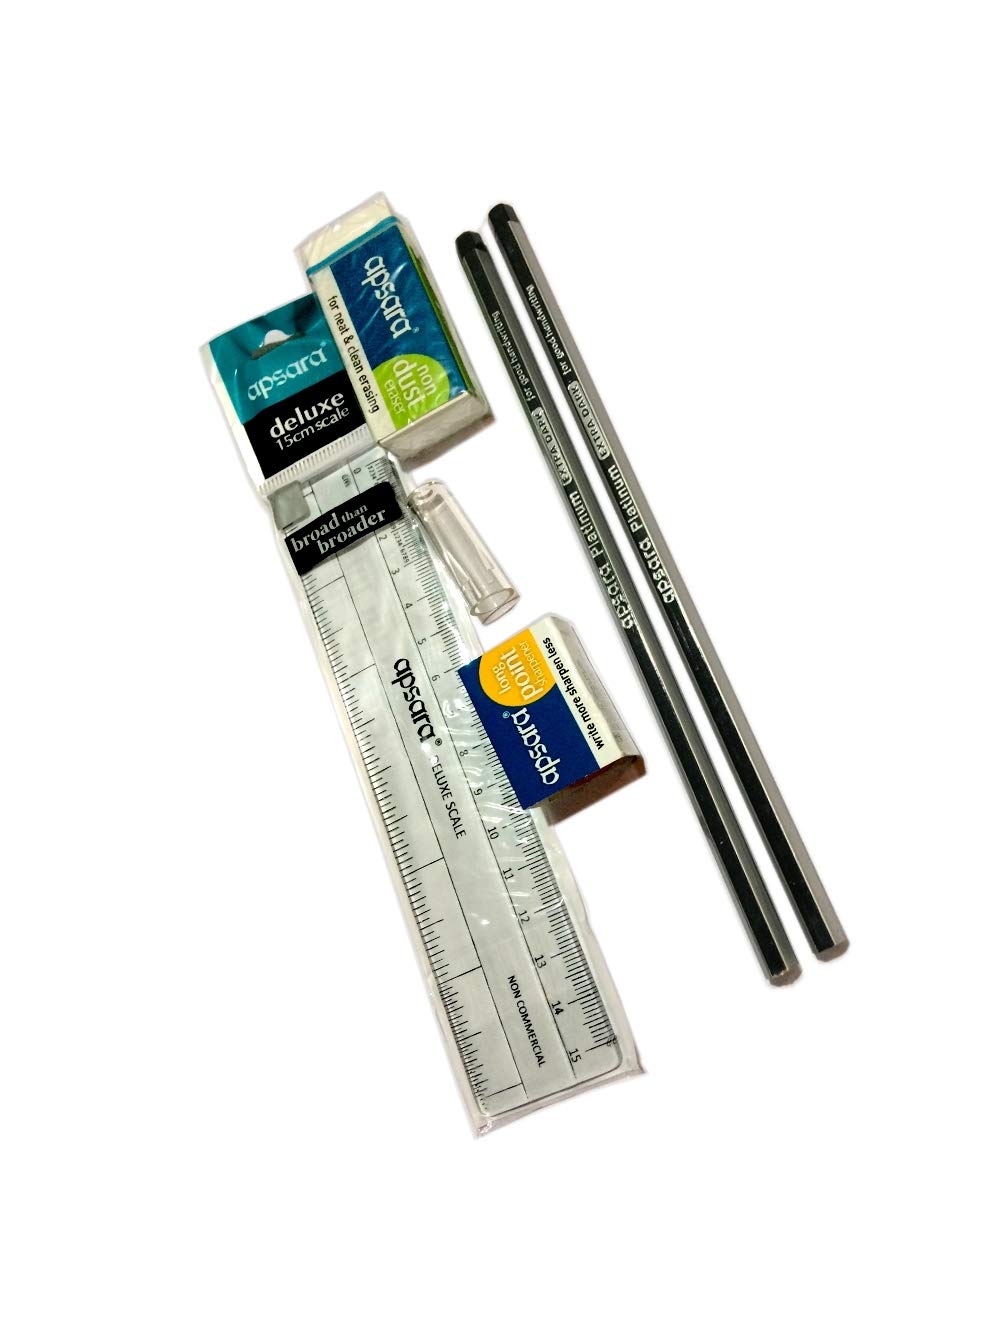 Scale, Eraser, sharpener and 2 pencil Apsara Platinum Kit